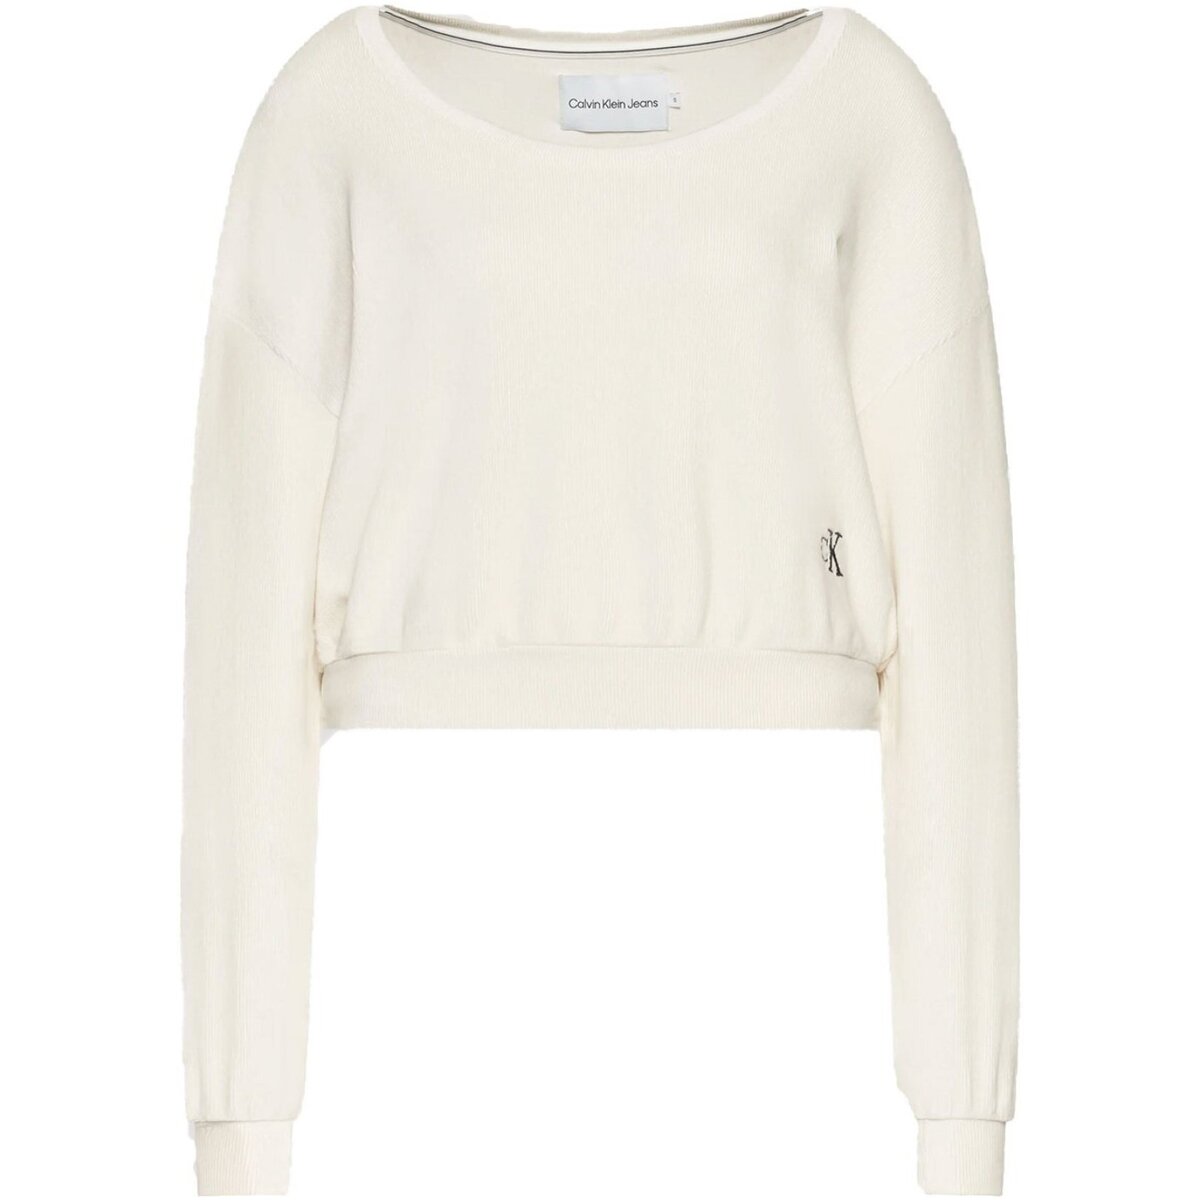 Textiel Dames Sweaters / Sweatshirts Calvin Klein Jeans J20J217743 Wit